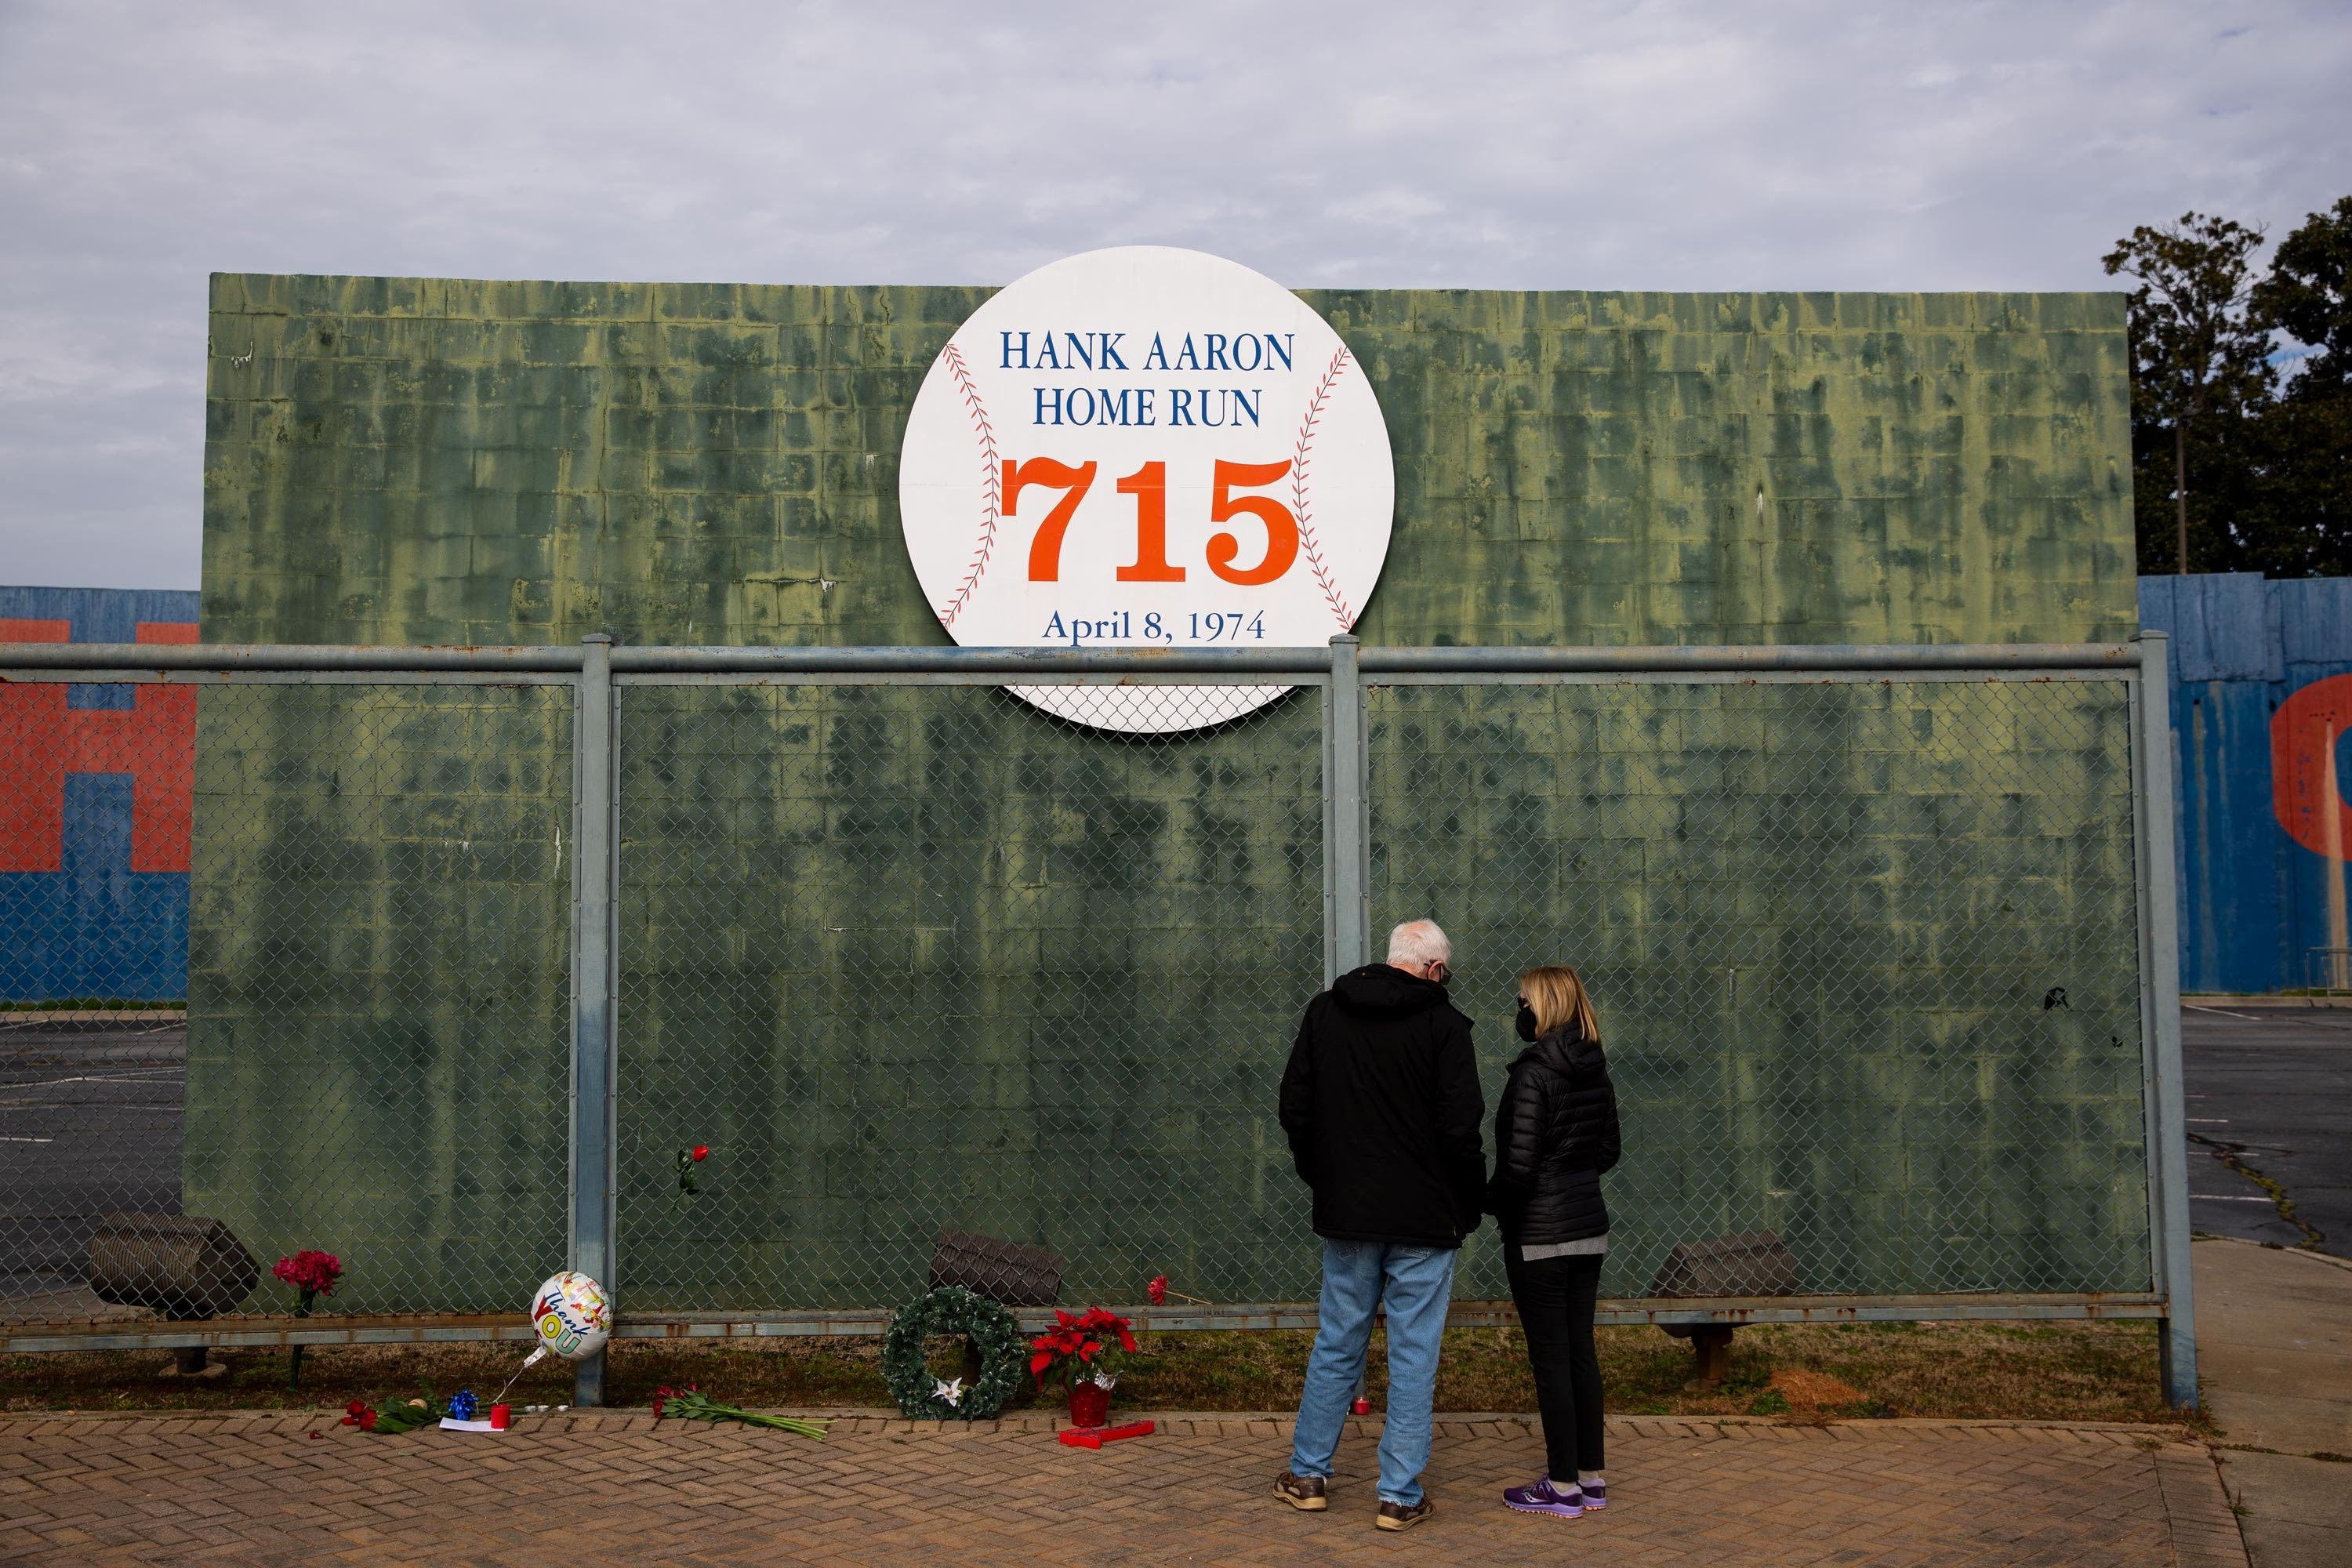 Mobile hopes to move Hank Aaron's childhood home back to original  neighborhood